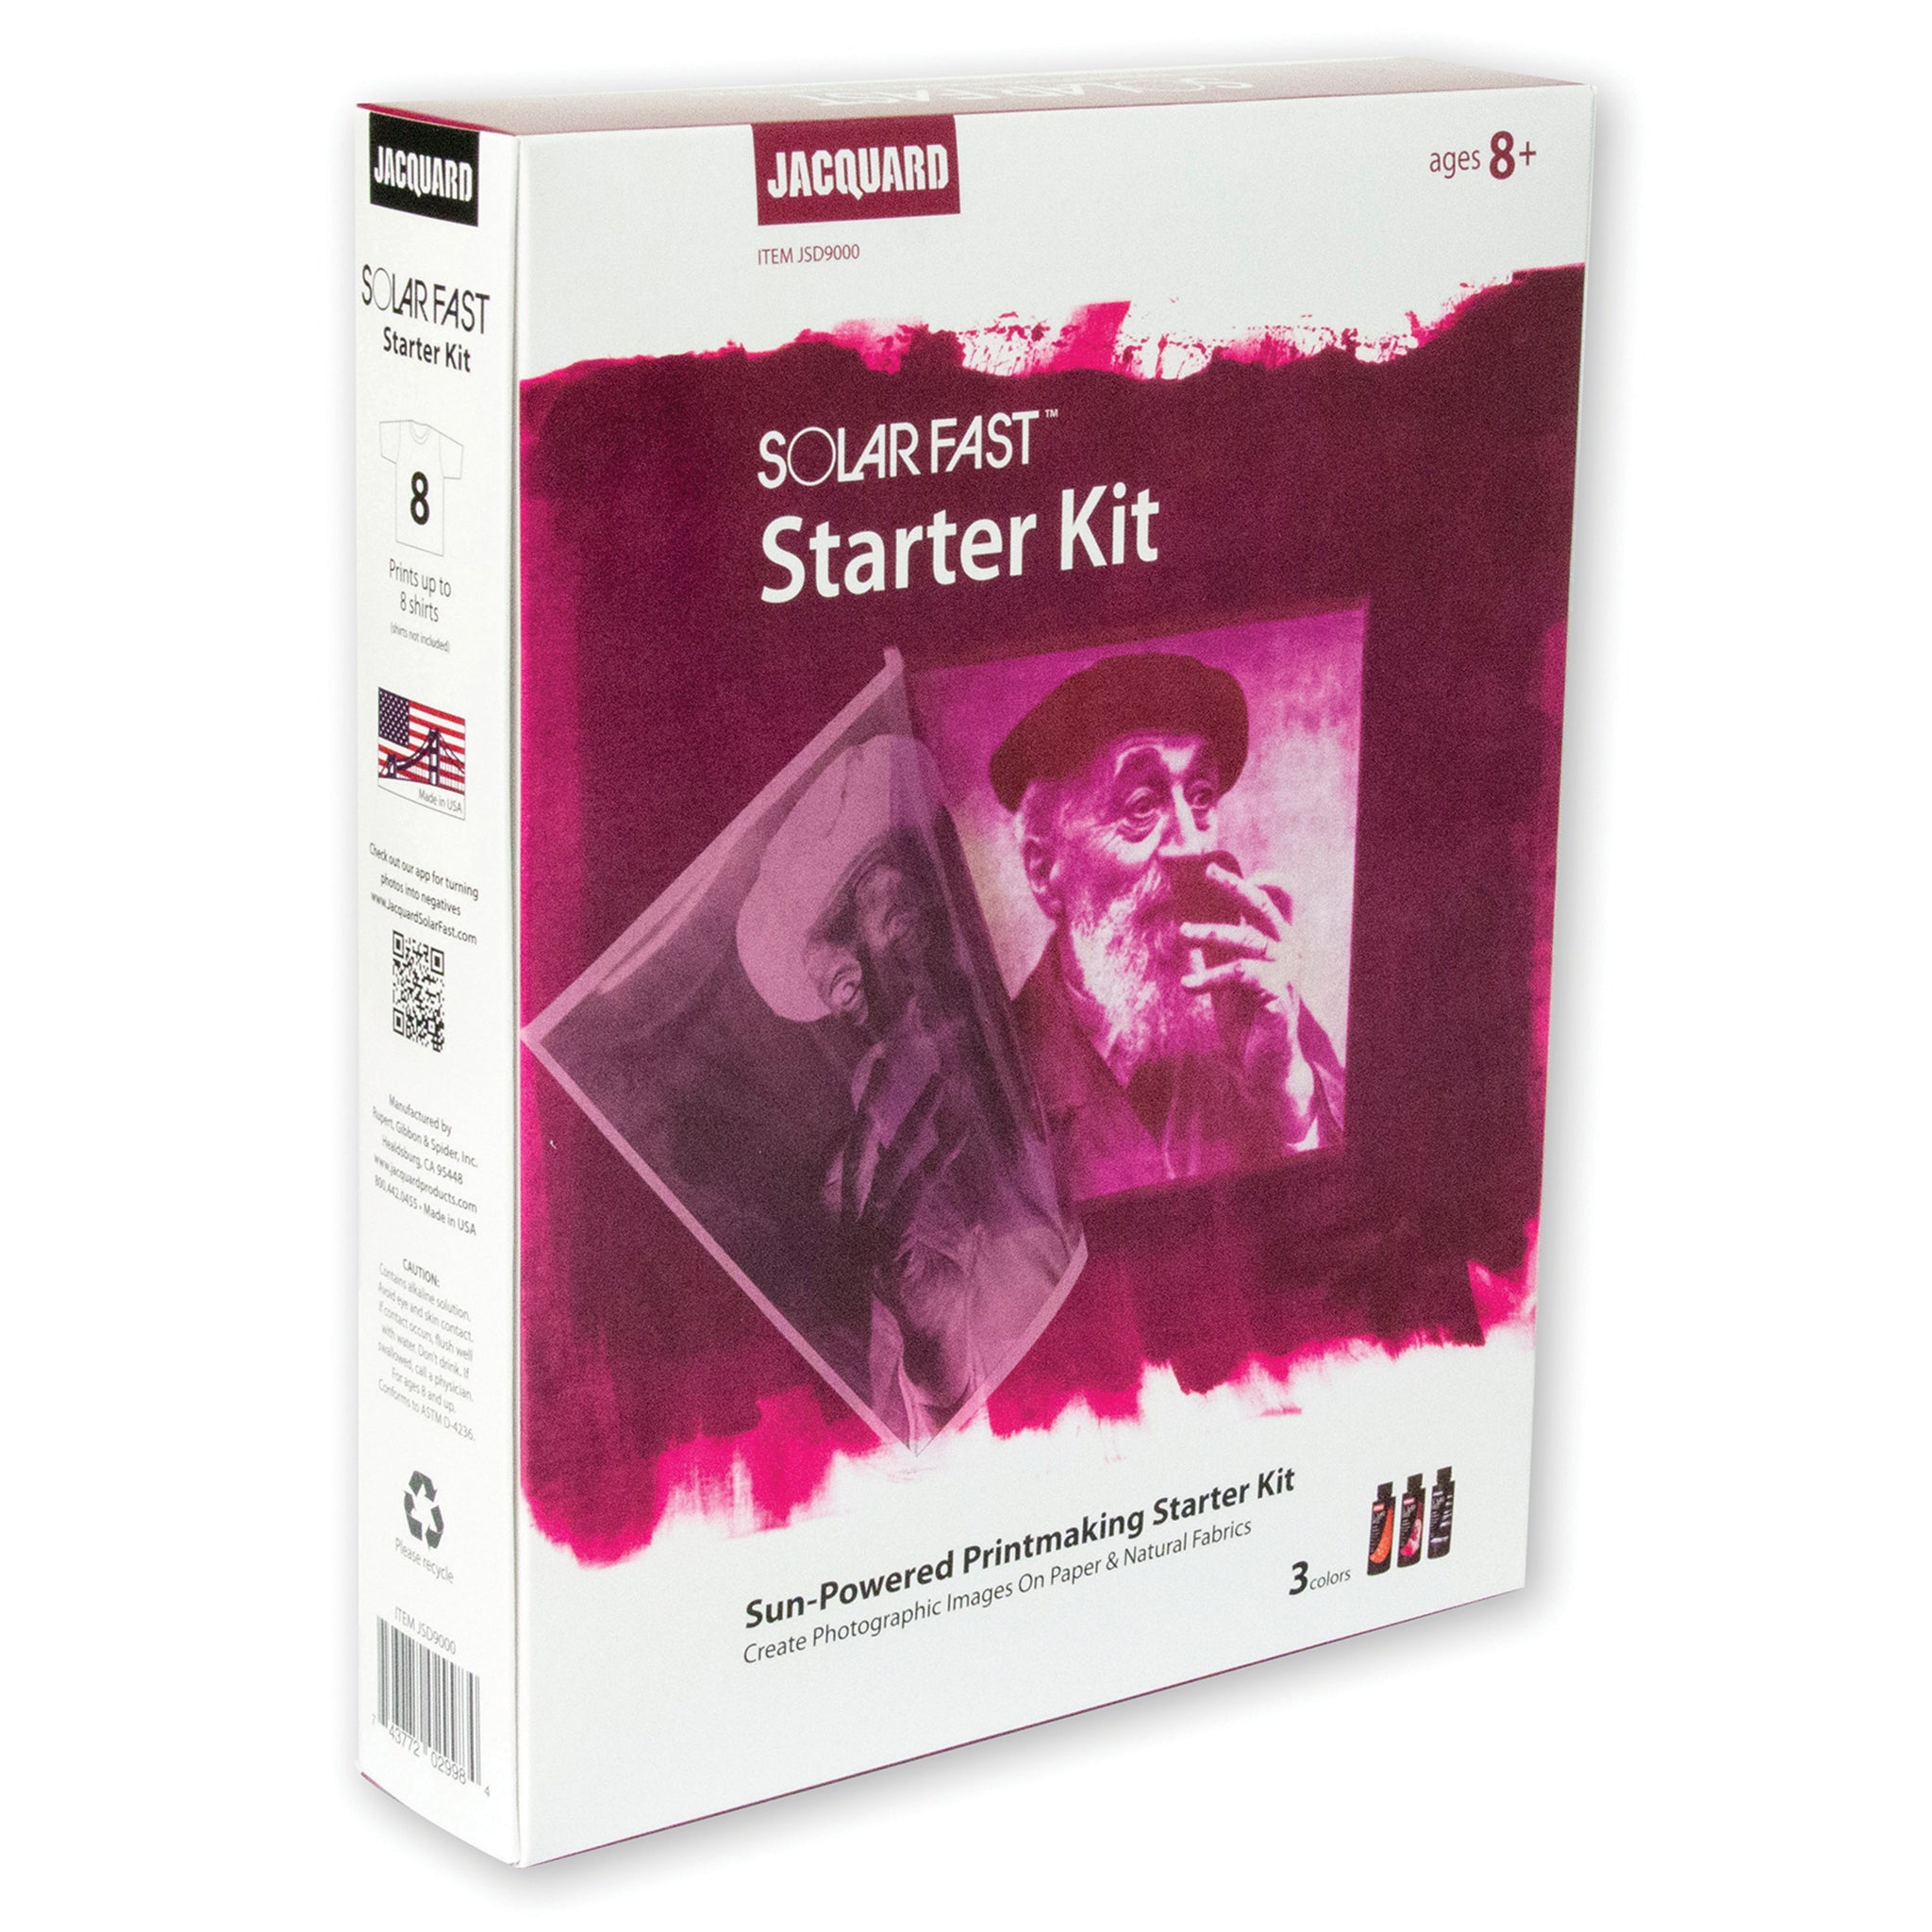 SolarFast Starter Kit